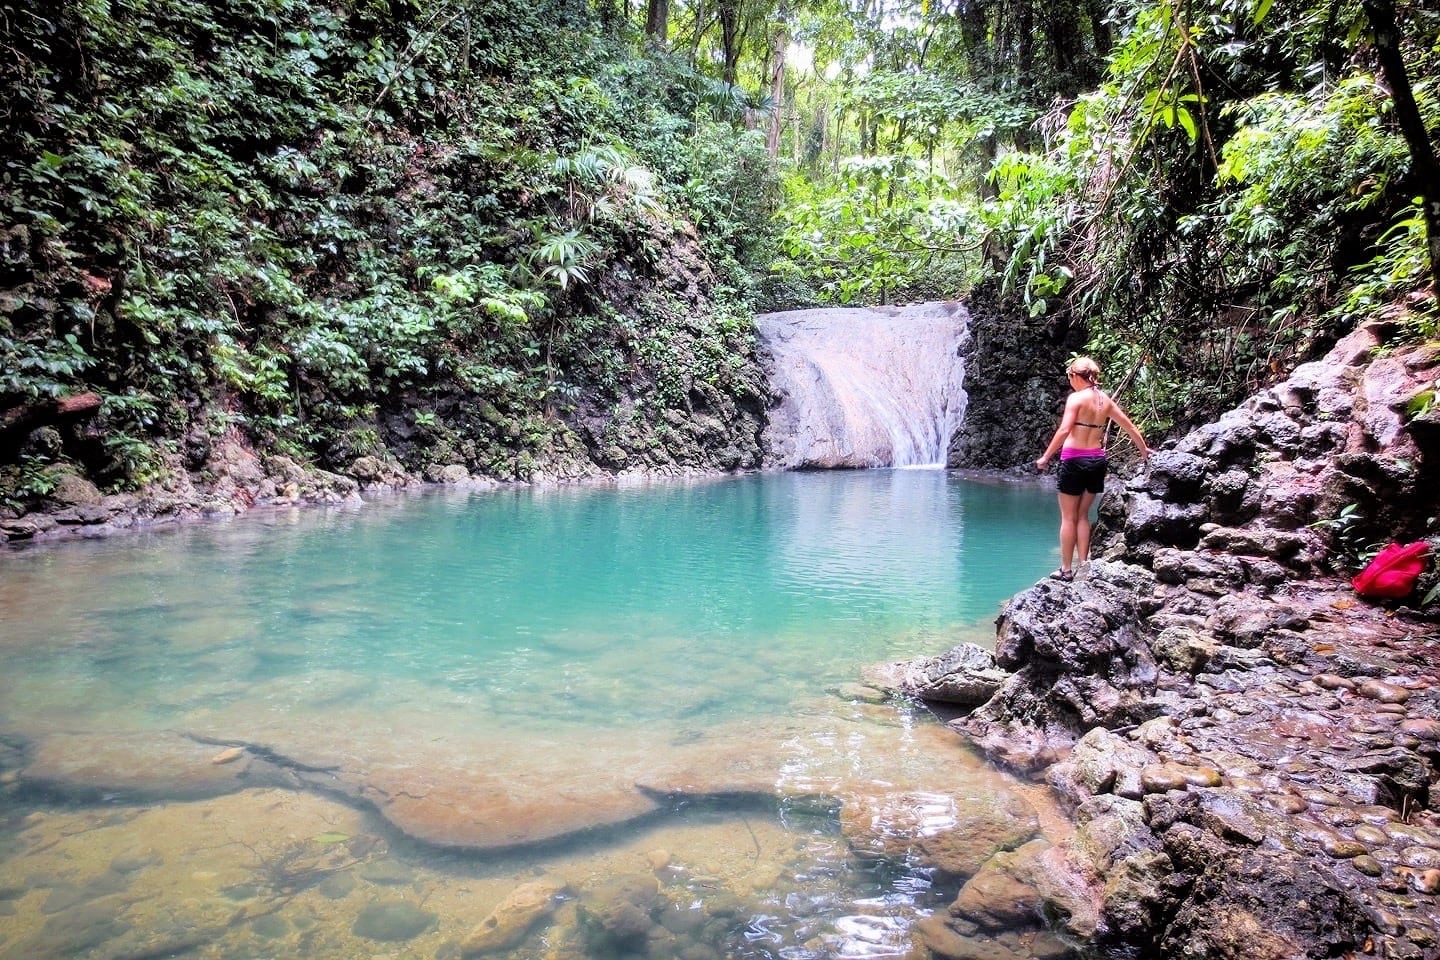 waterfall and pool in jungle